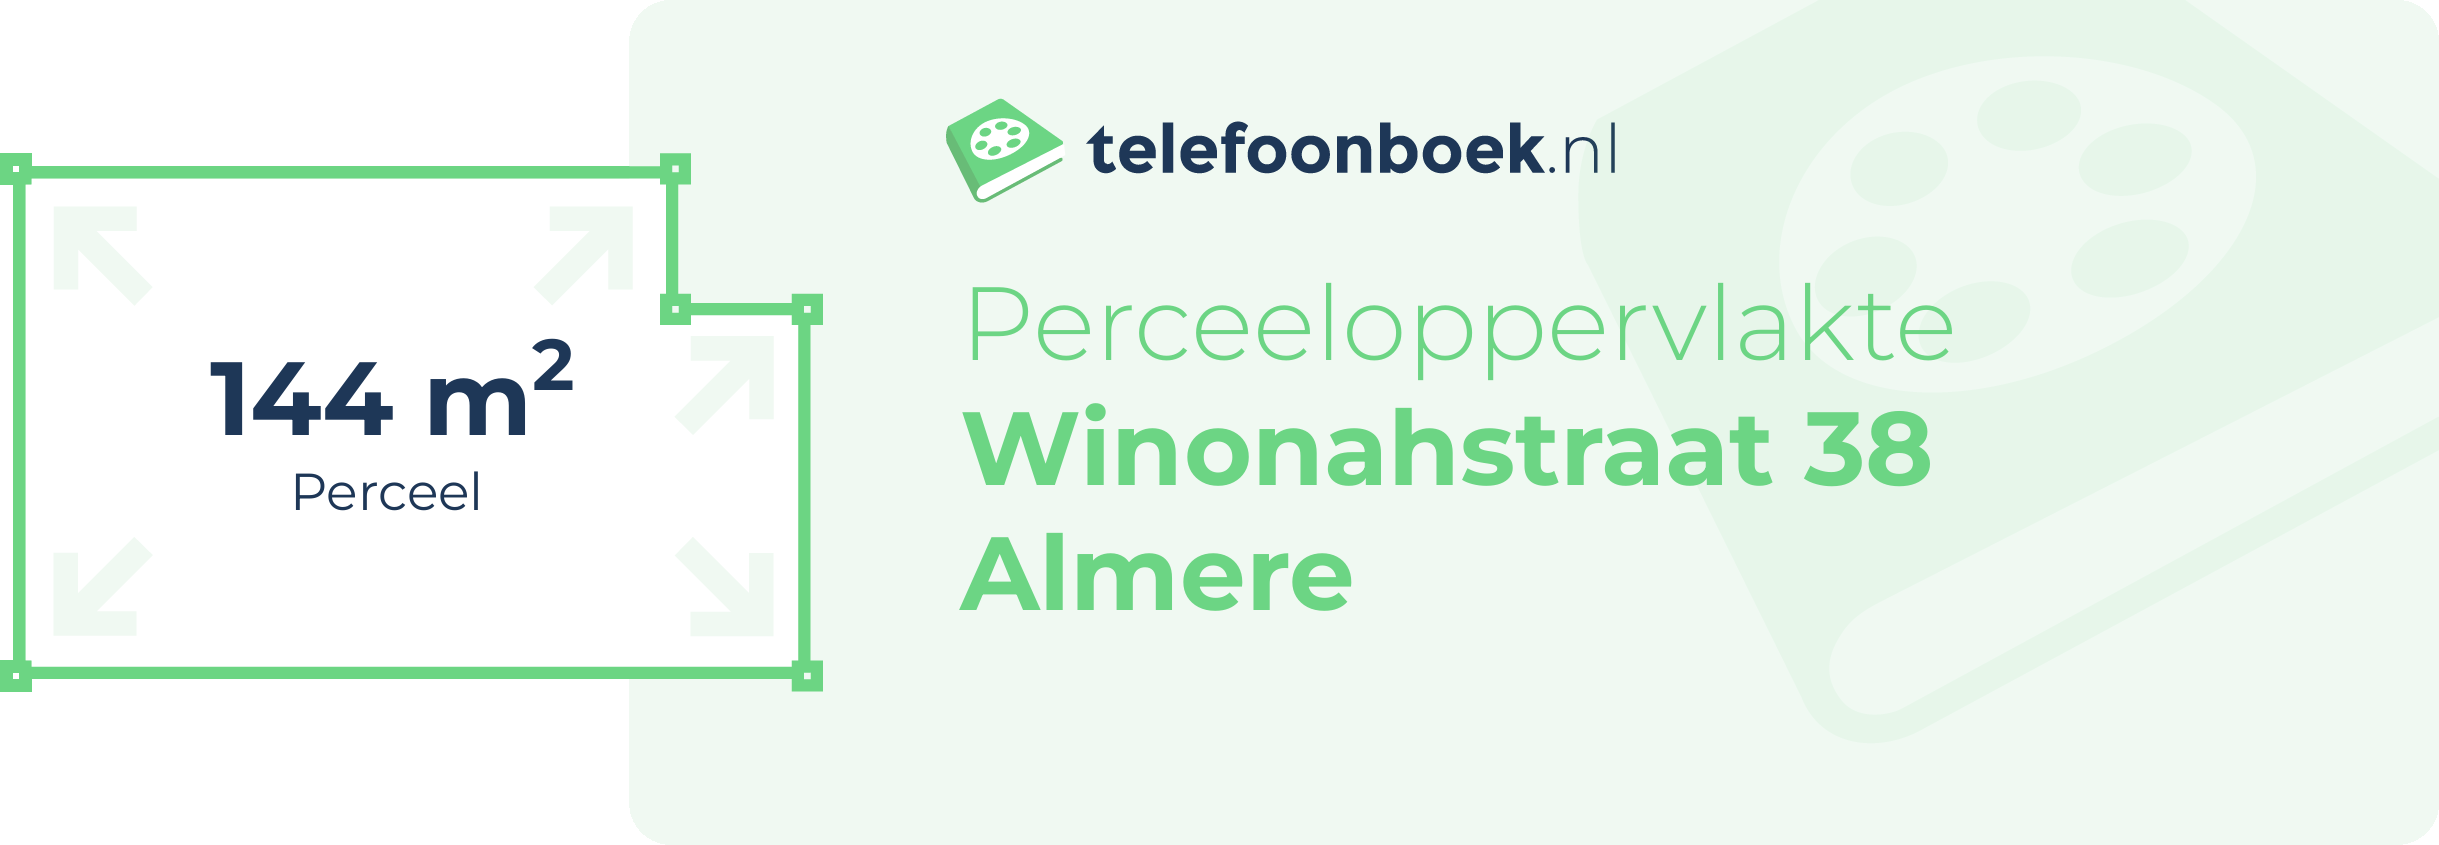 Perceeloppervlakte Winonahstraat 38 Almere